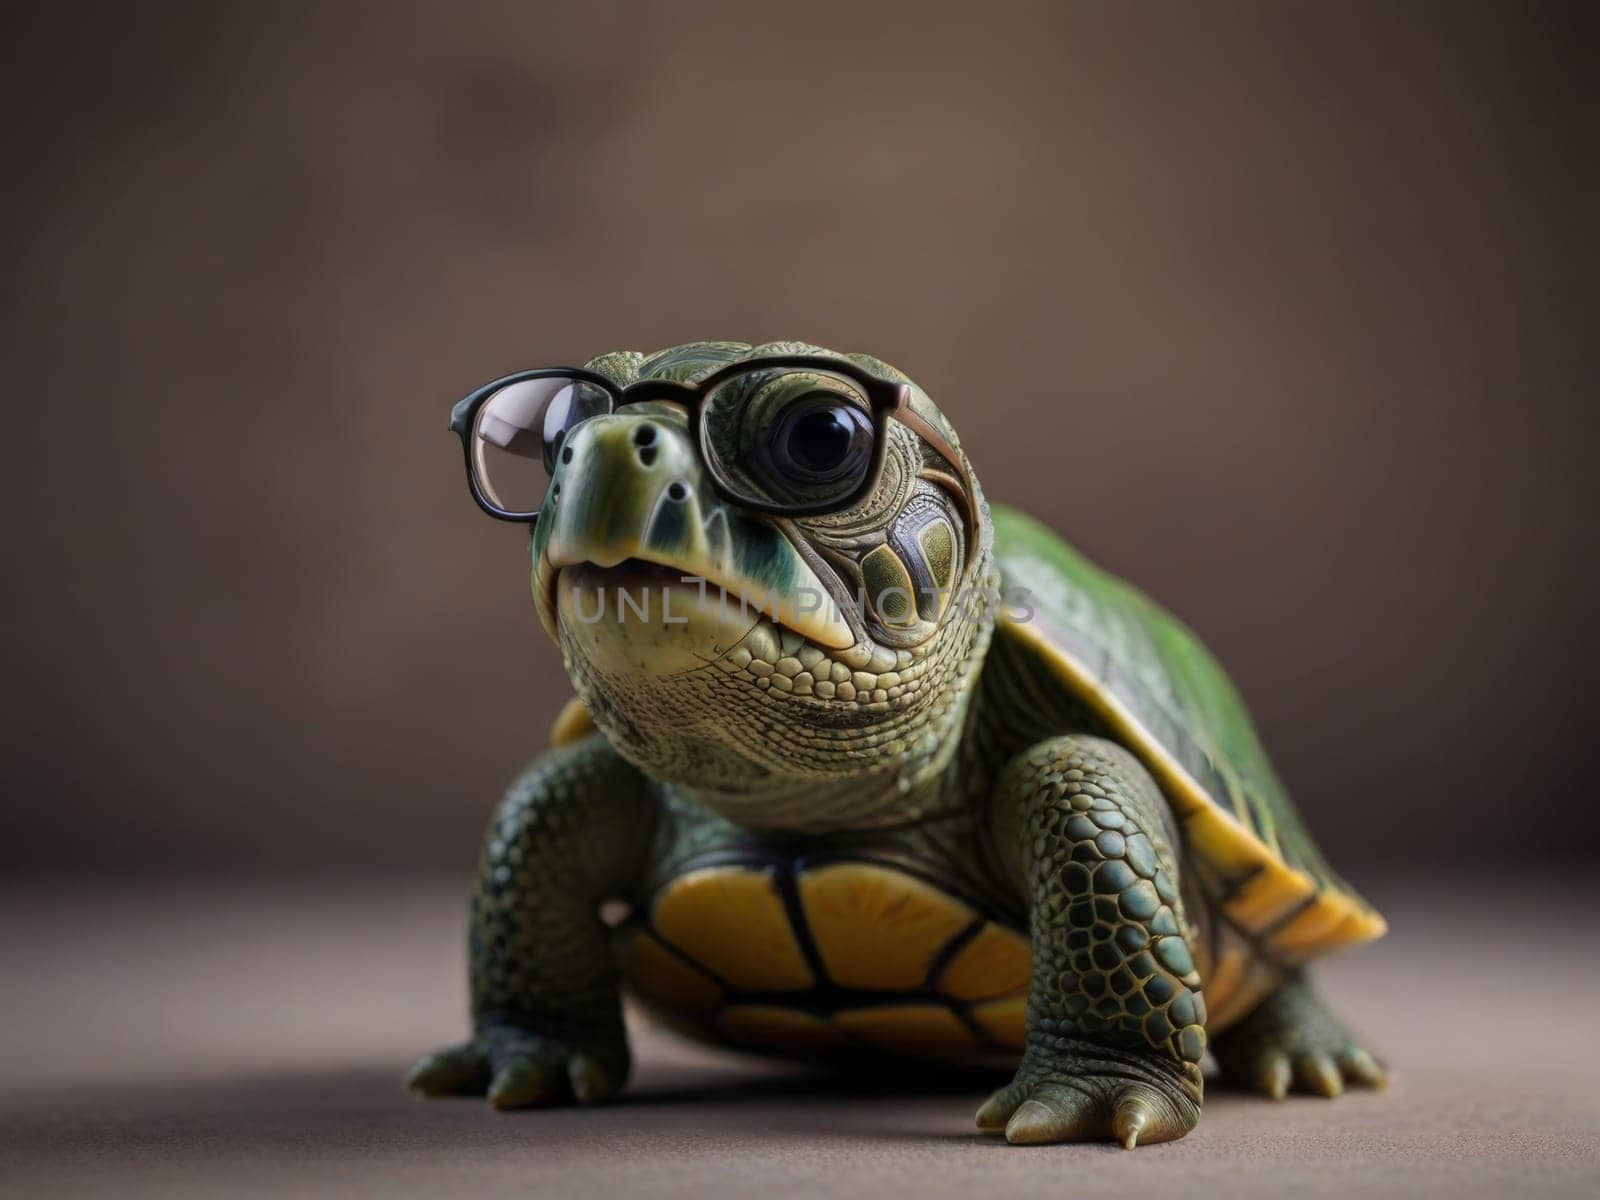 Sad turtle wears sunglasses against gray-green studio backdrop, evoking melancholic vibes. Generative AI